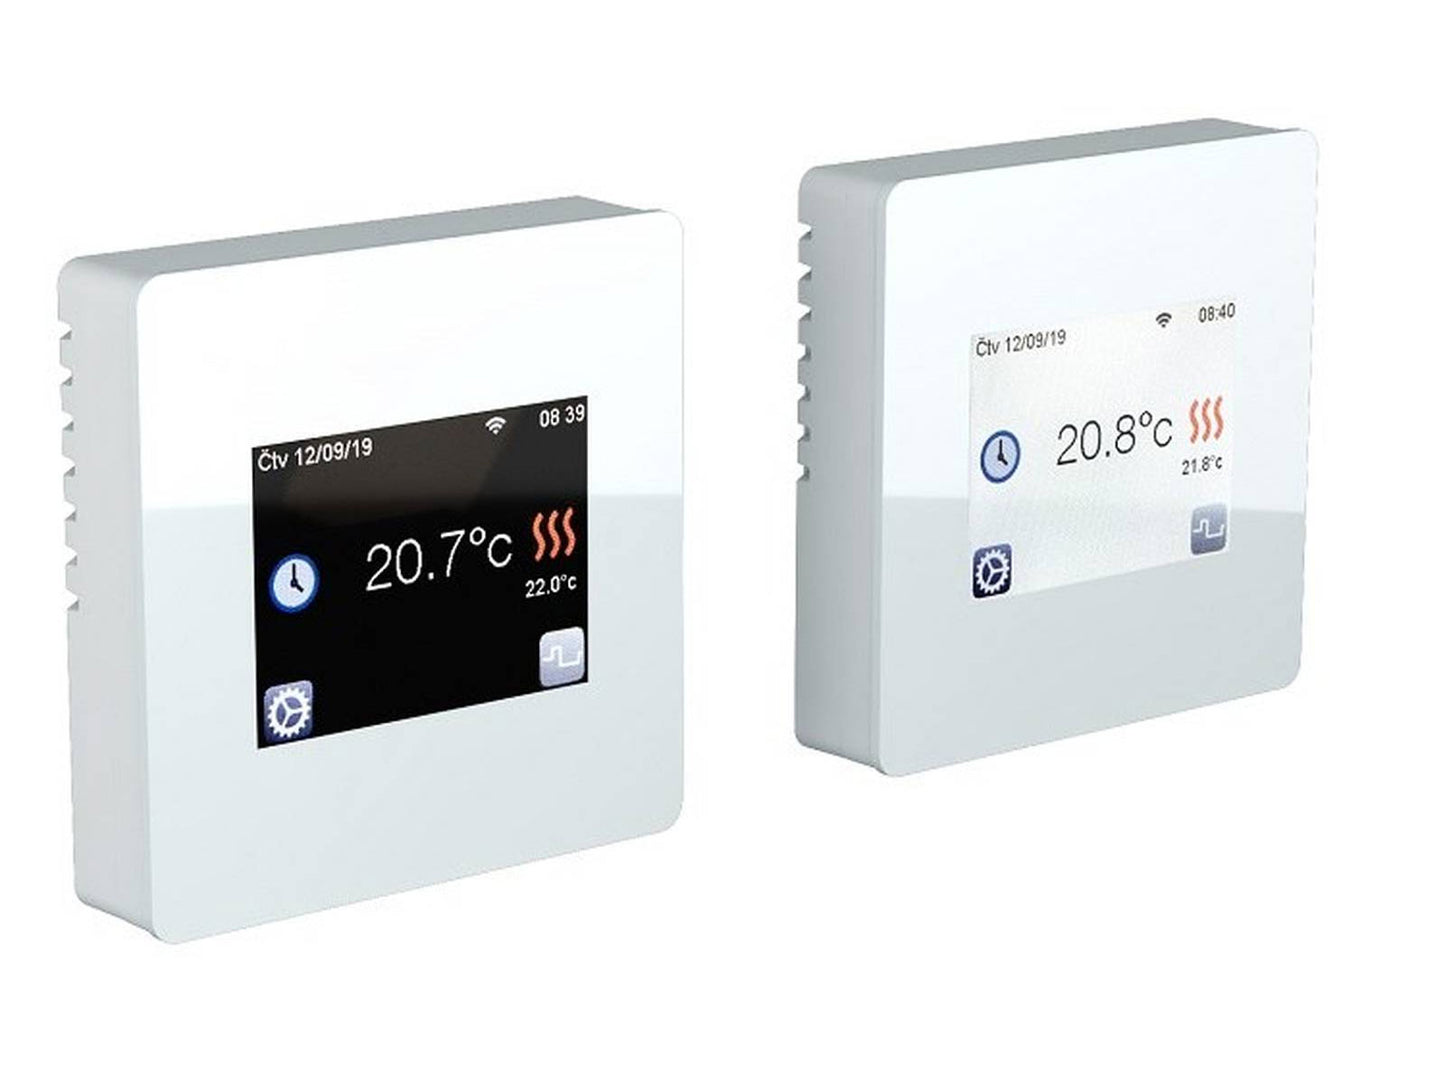 Montageset - Thermostat Fenix TFT - WIFI mit AL-MAT 80 W/m² für Laminat / Klickvinyl